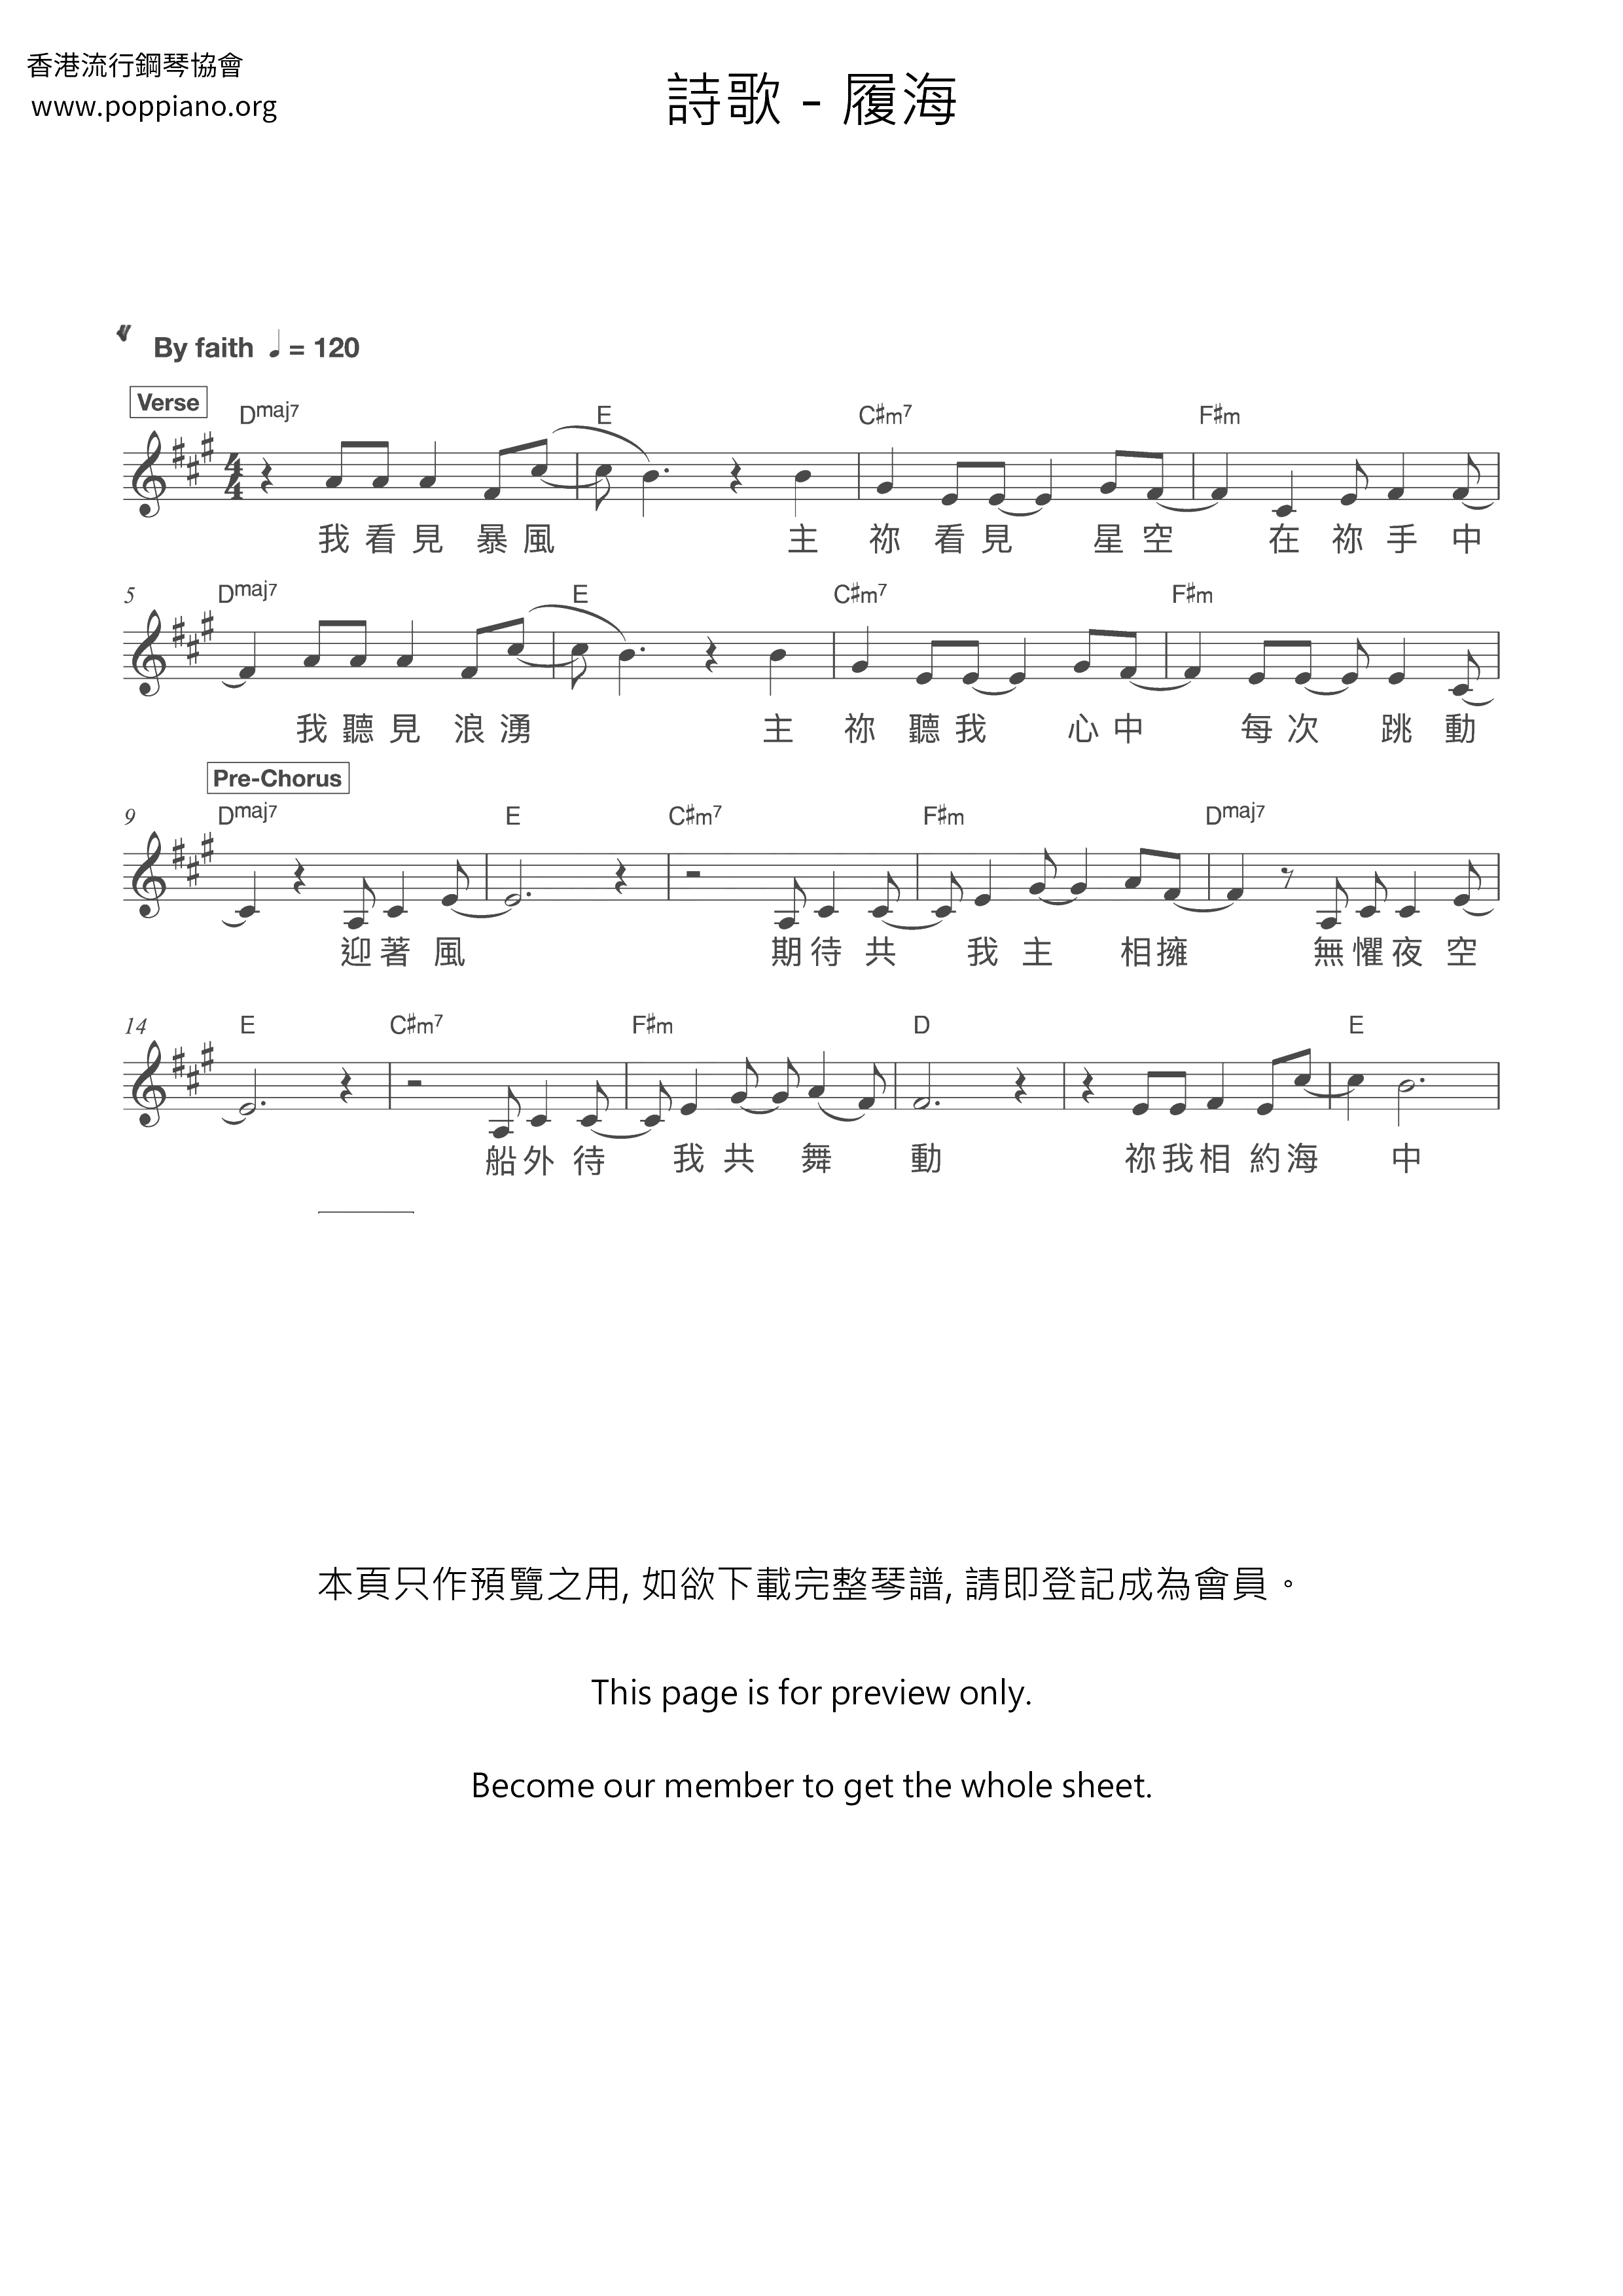 Lu Hai Score